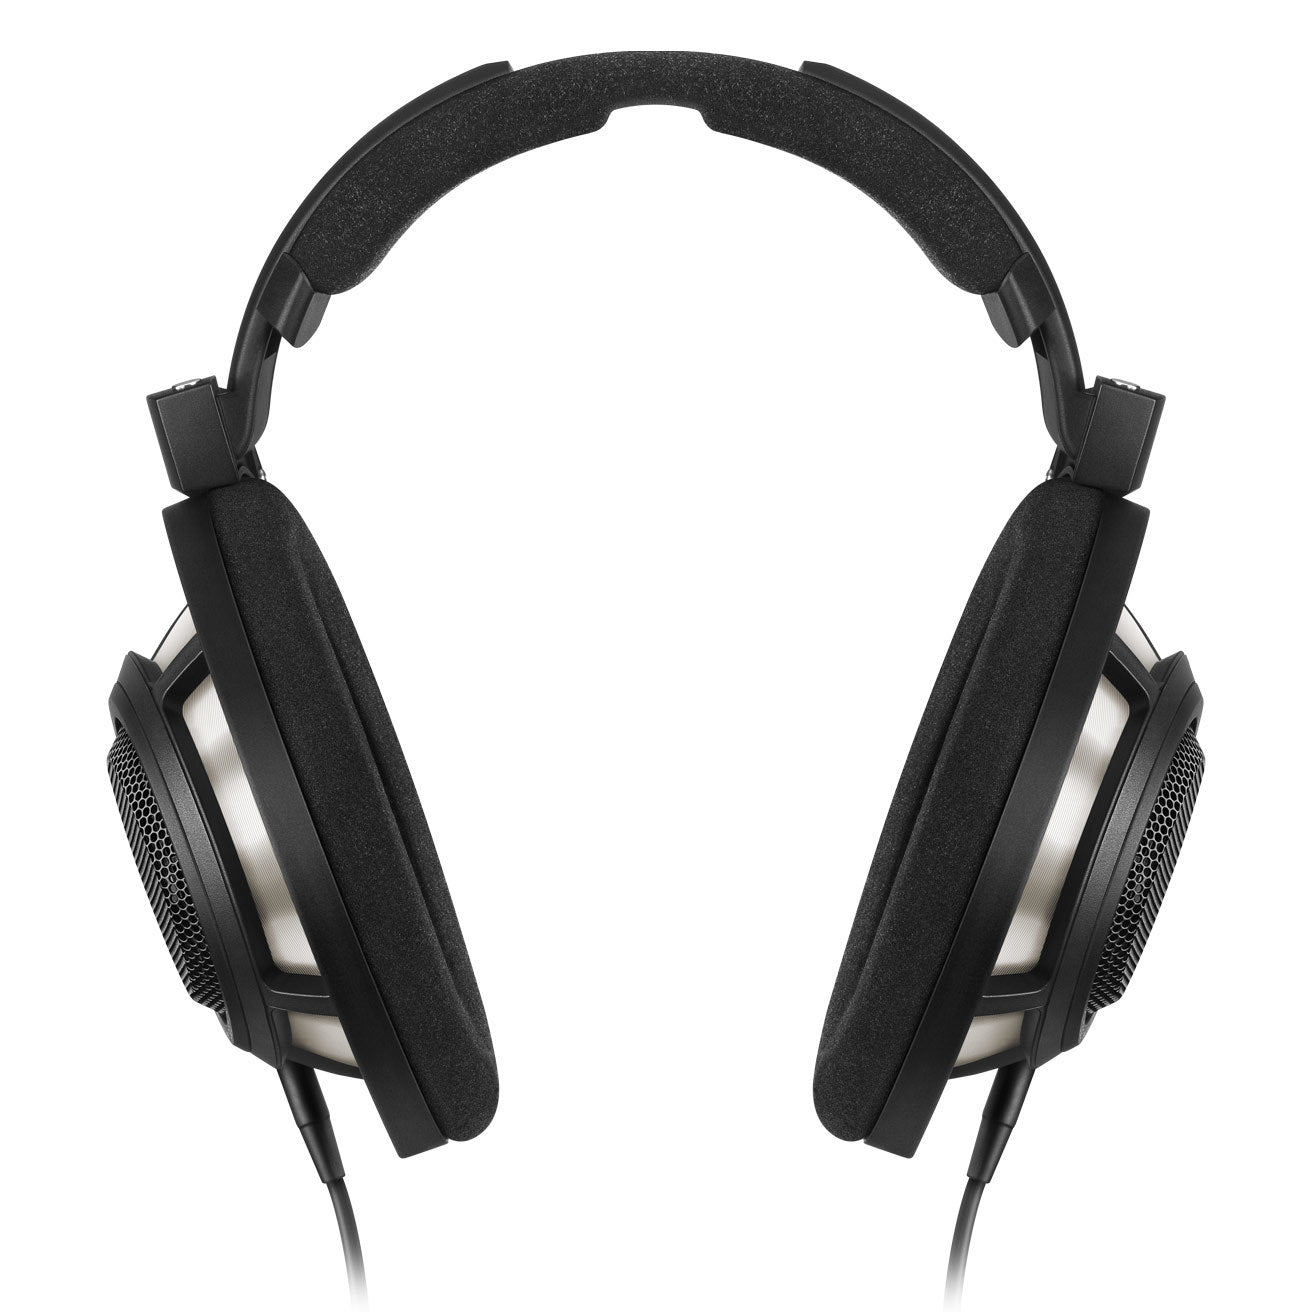 Sennheiser HD 800 S Reference Class headphones